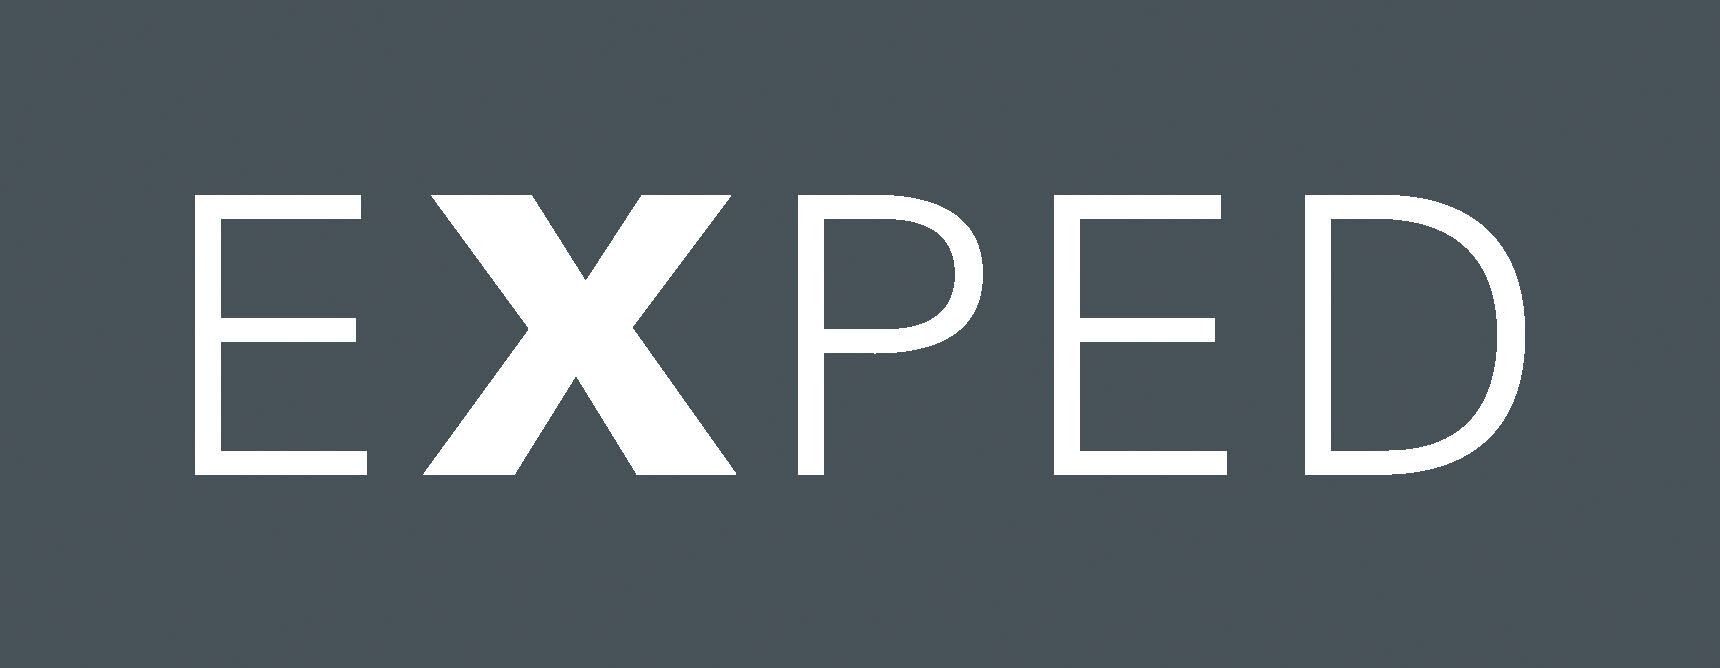 EXPED_Logo.jpg